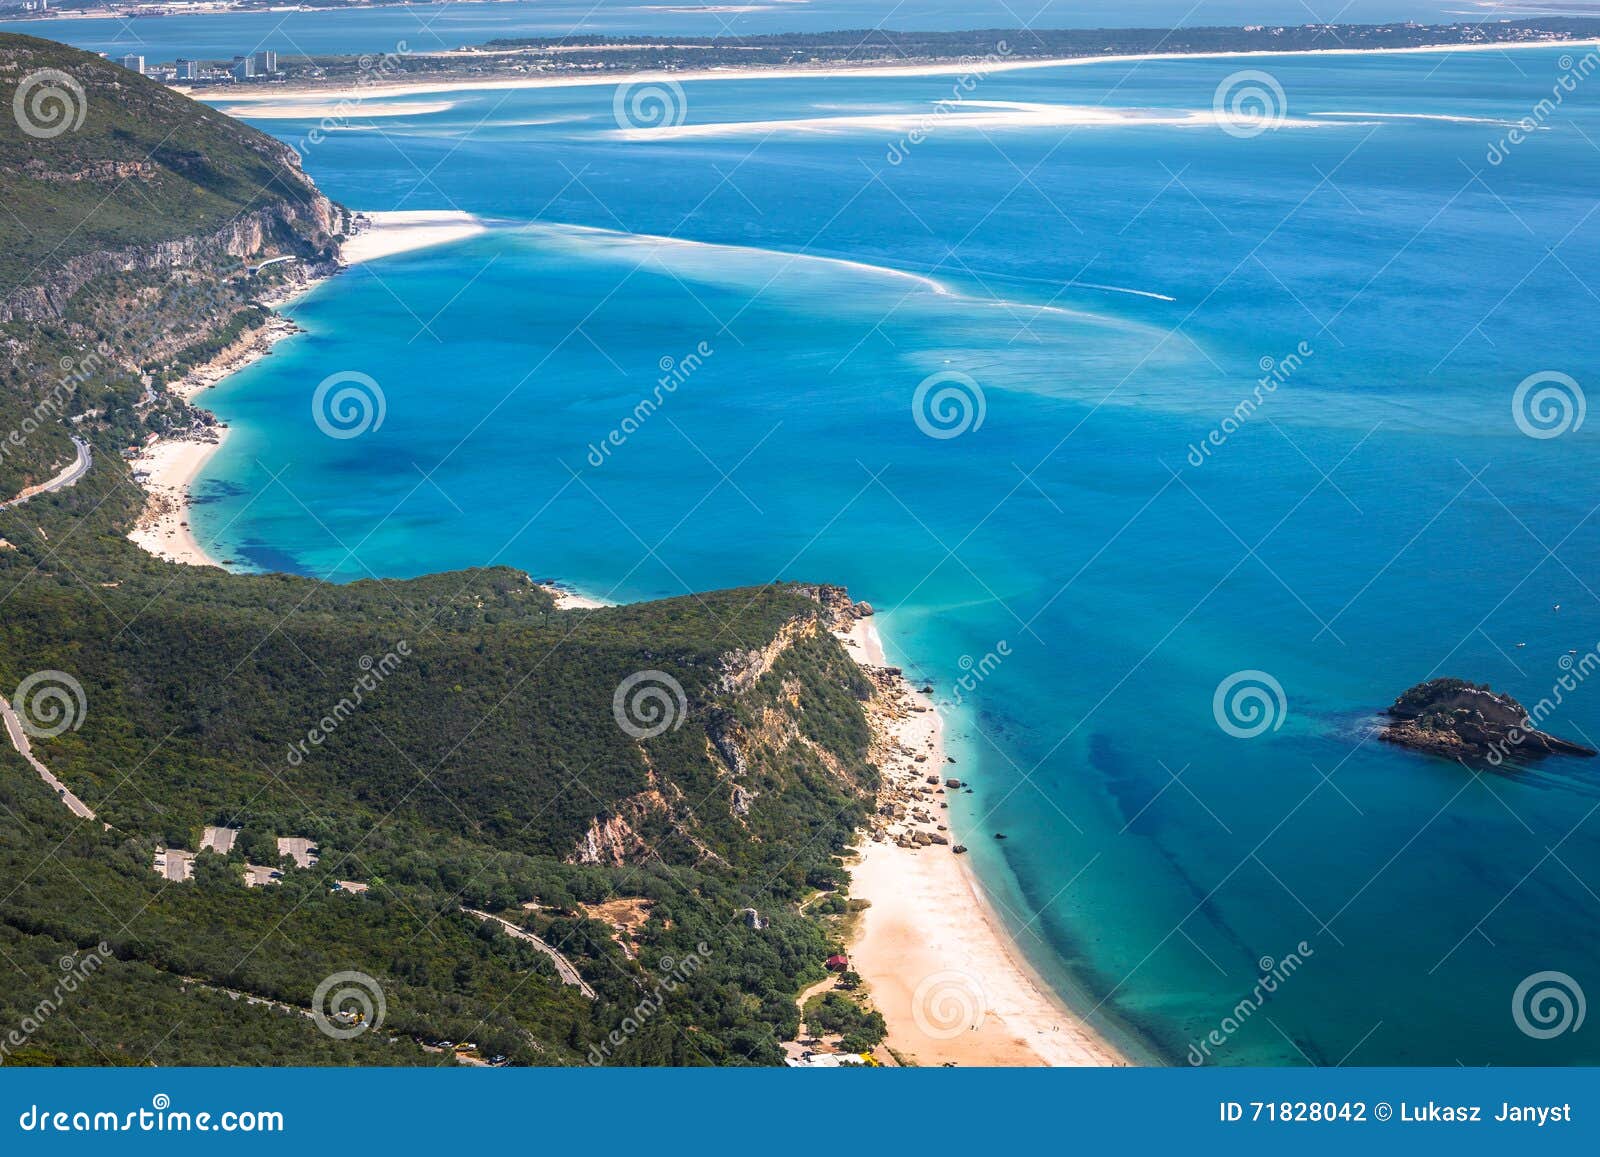 beautiful landscape view of the national park arrabida in setubal,portugal.